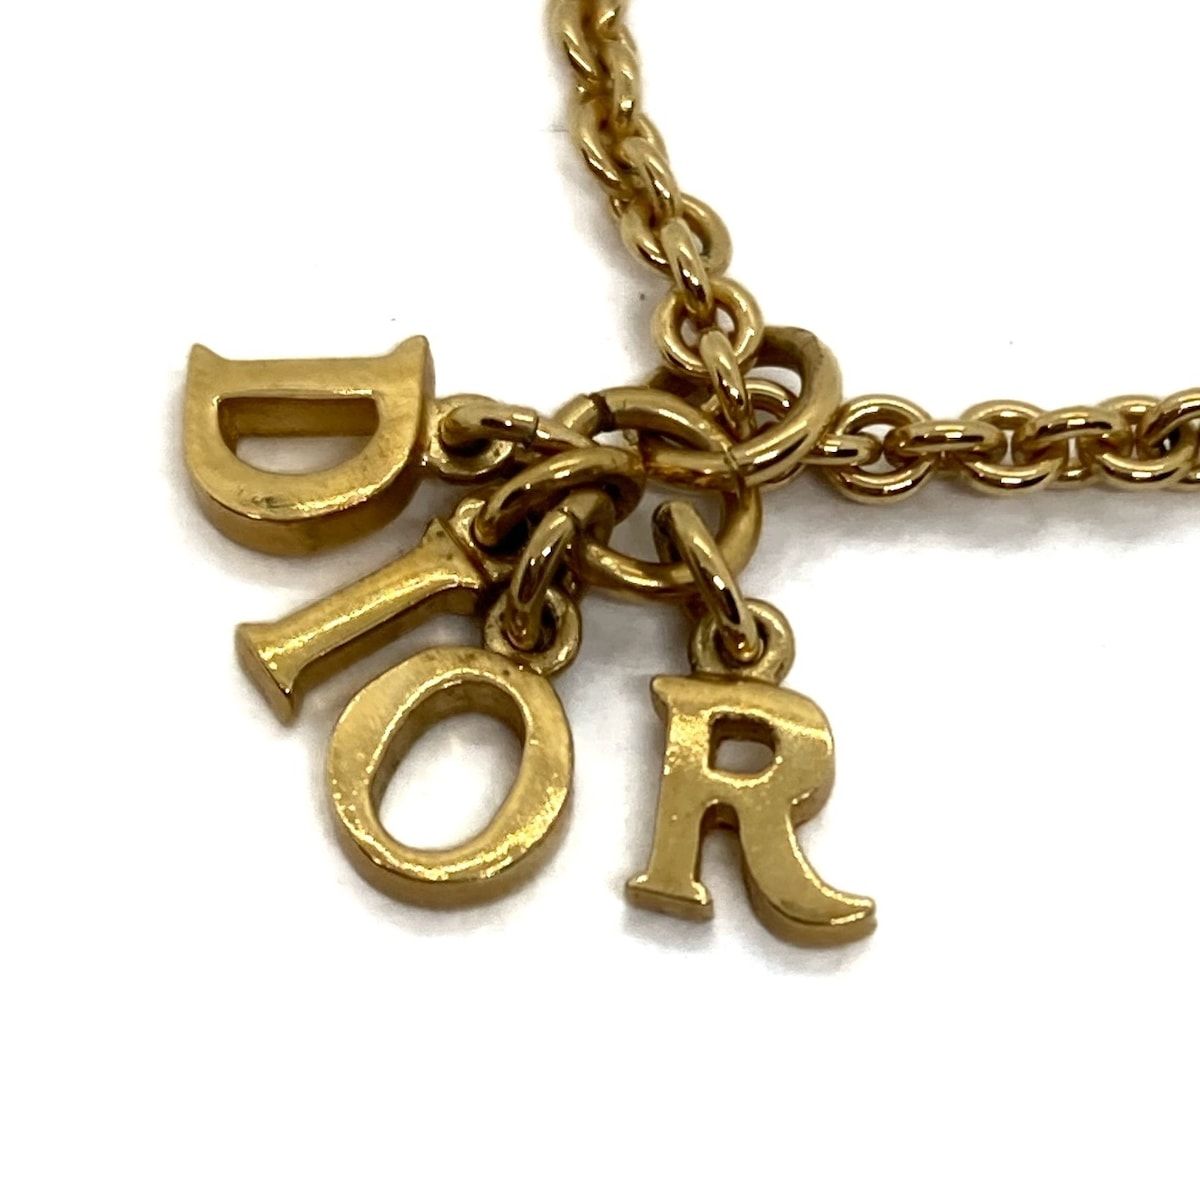 DIOR/ChristianDior(ディオール/クリスチャンディオール) ネックレス美品 - 金属素材 ゴールド DIORモチーフ